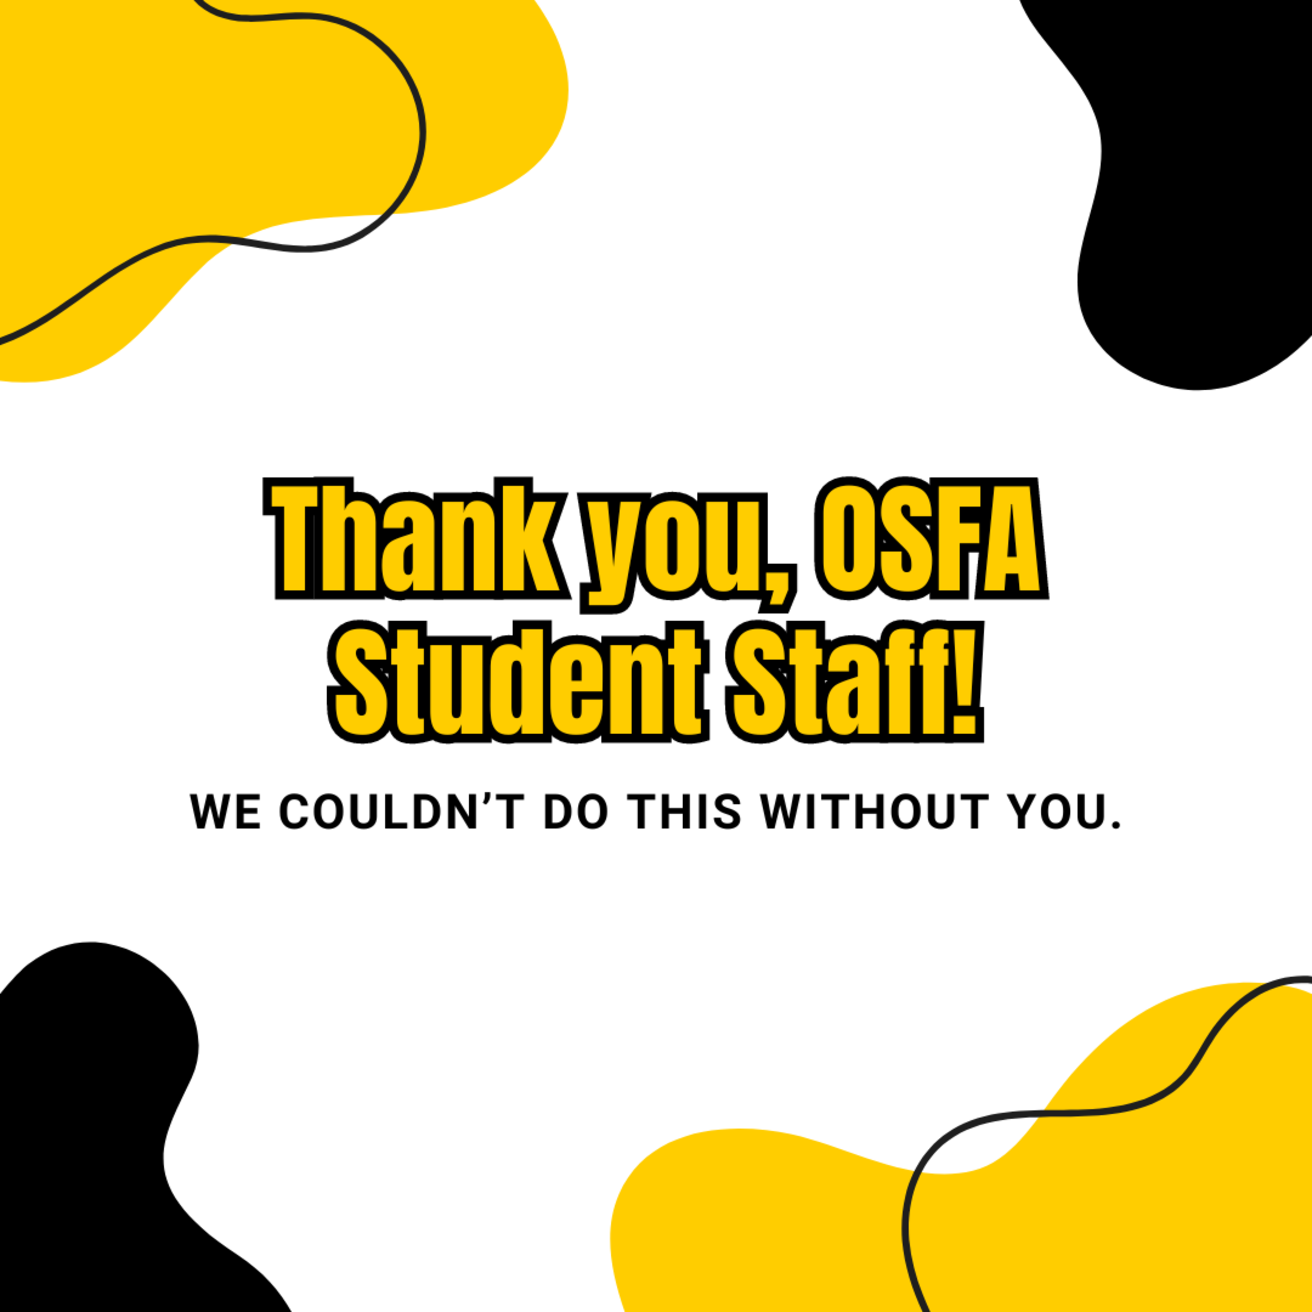 Thank you OSFA Student Staff!